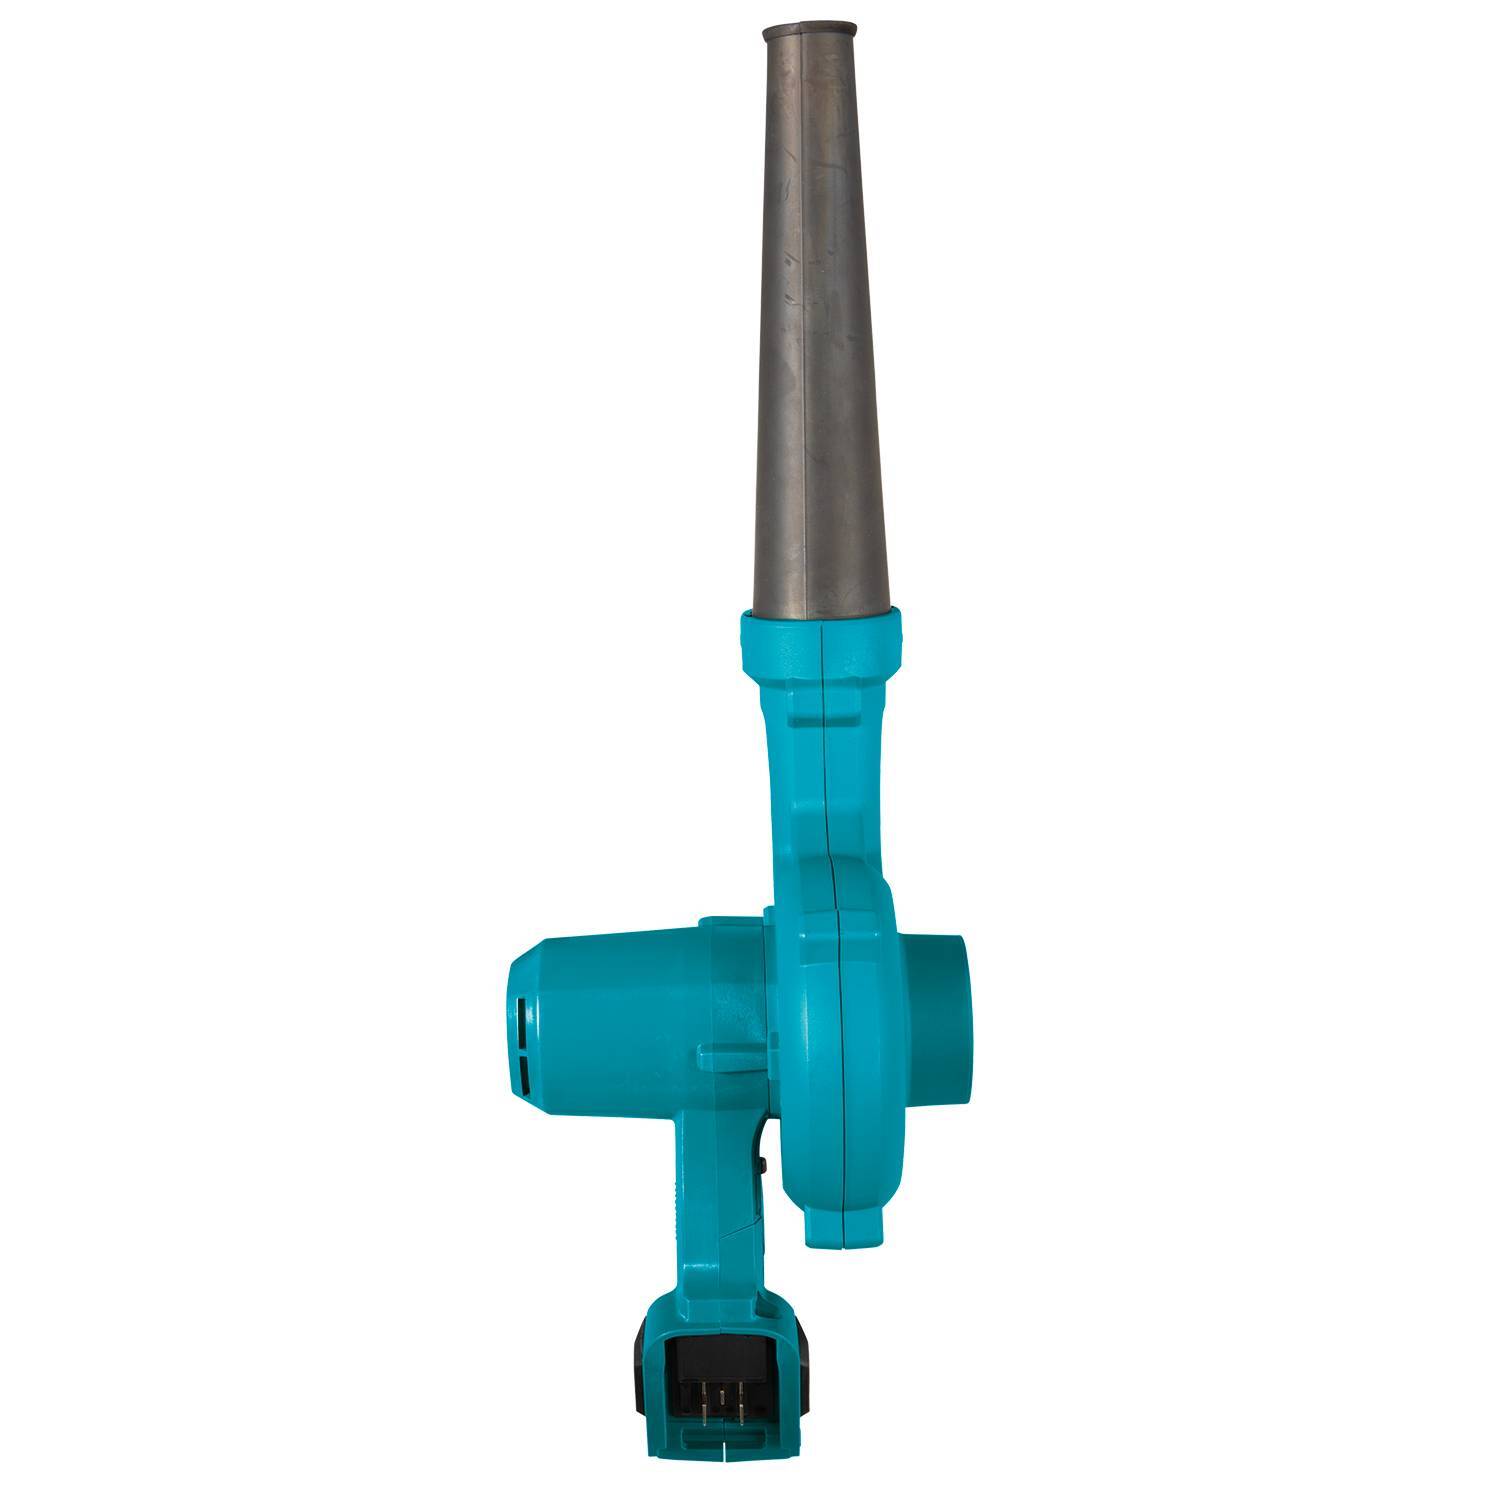 Makita 18V Blower - Short Nozzle (tool only) DUB185Z